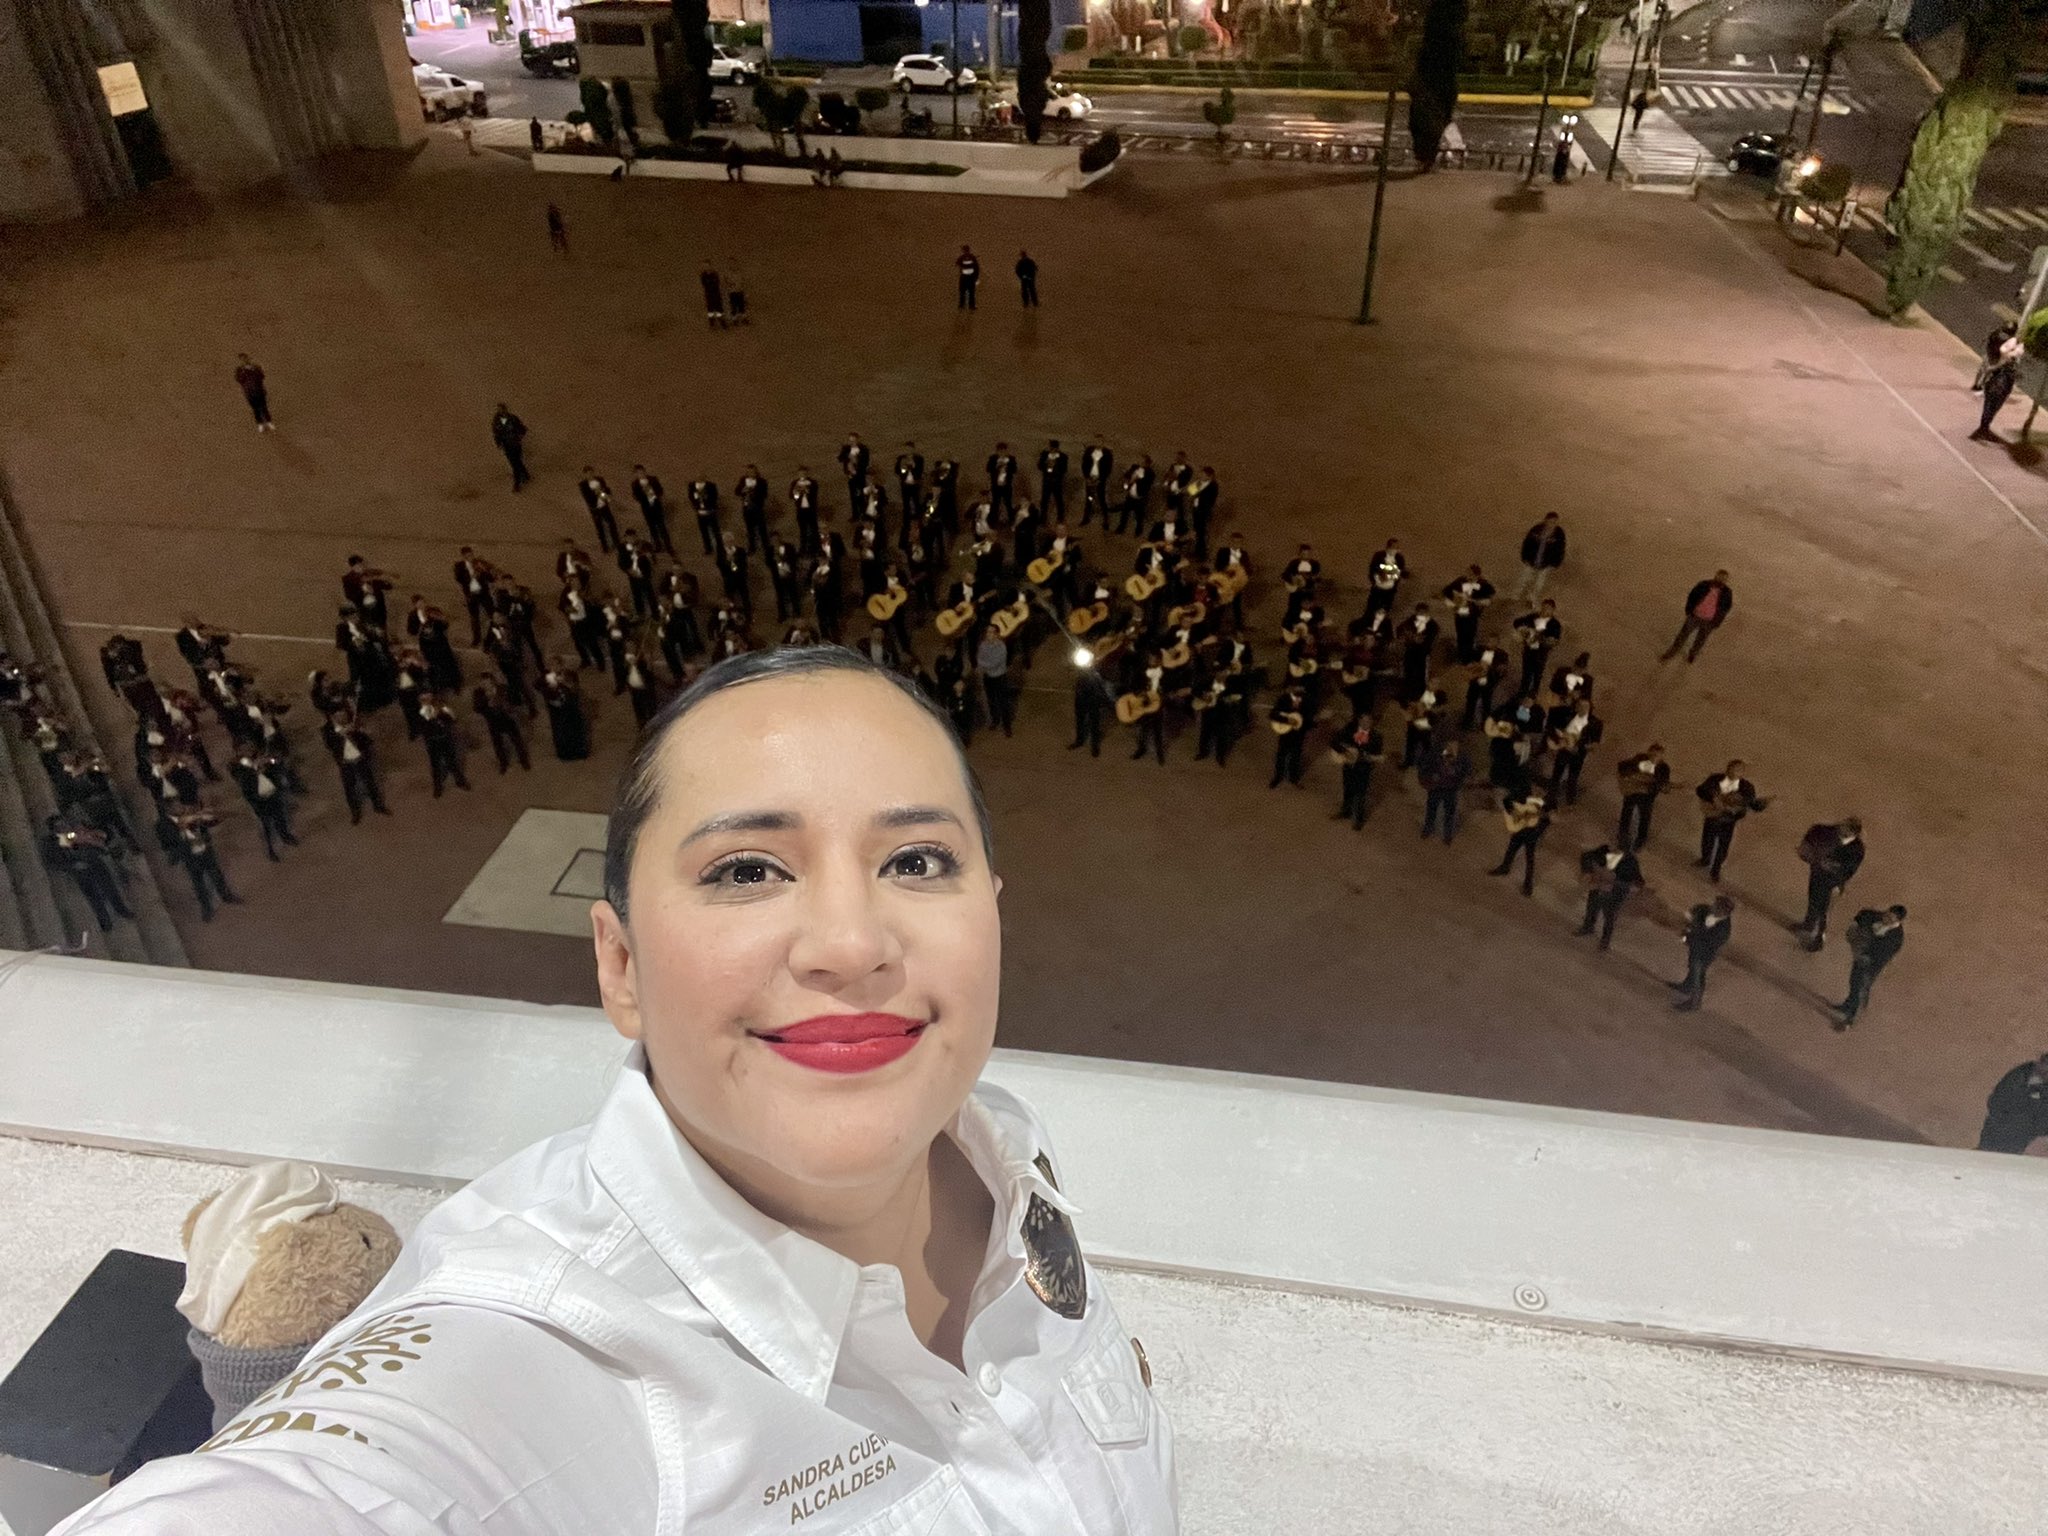 La alcaldesa presumió una serenata de hasta 100 mariachis. Foto: Twitter/@SandraCuevas_